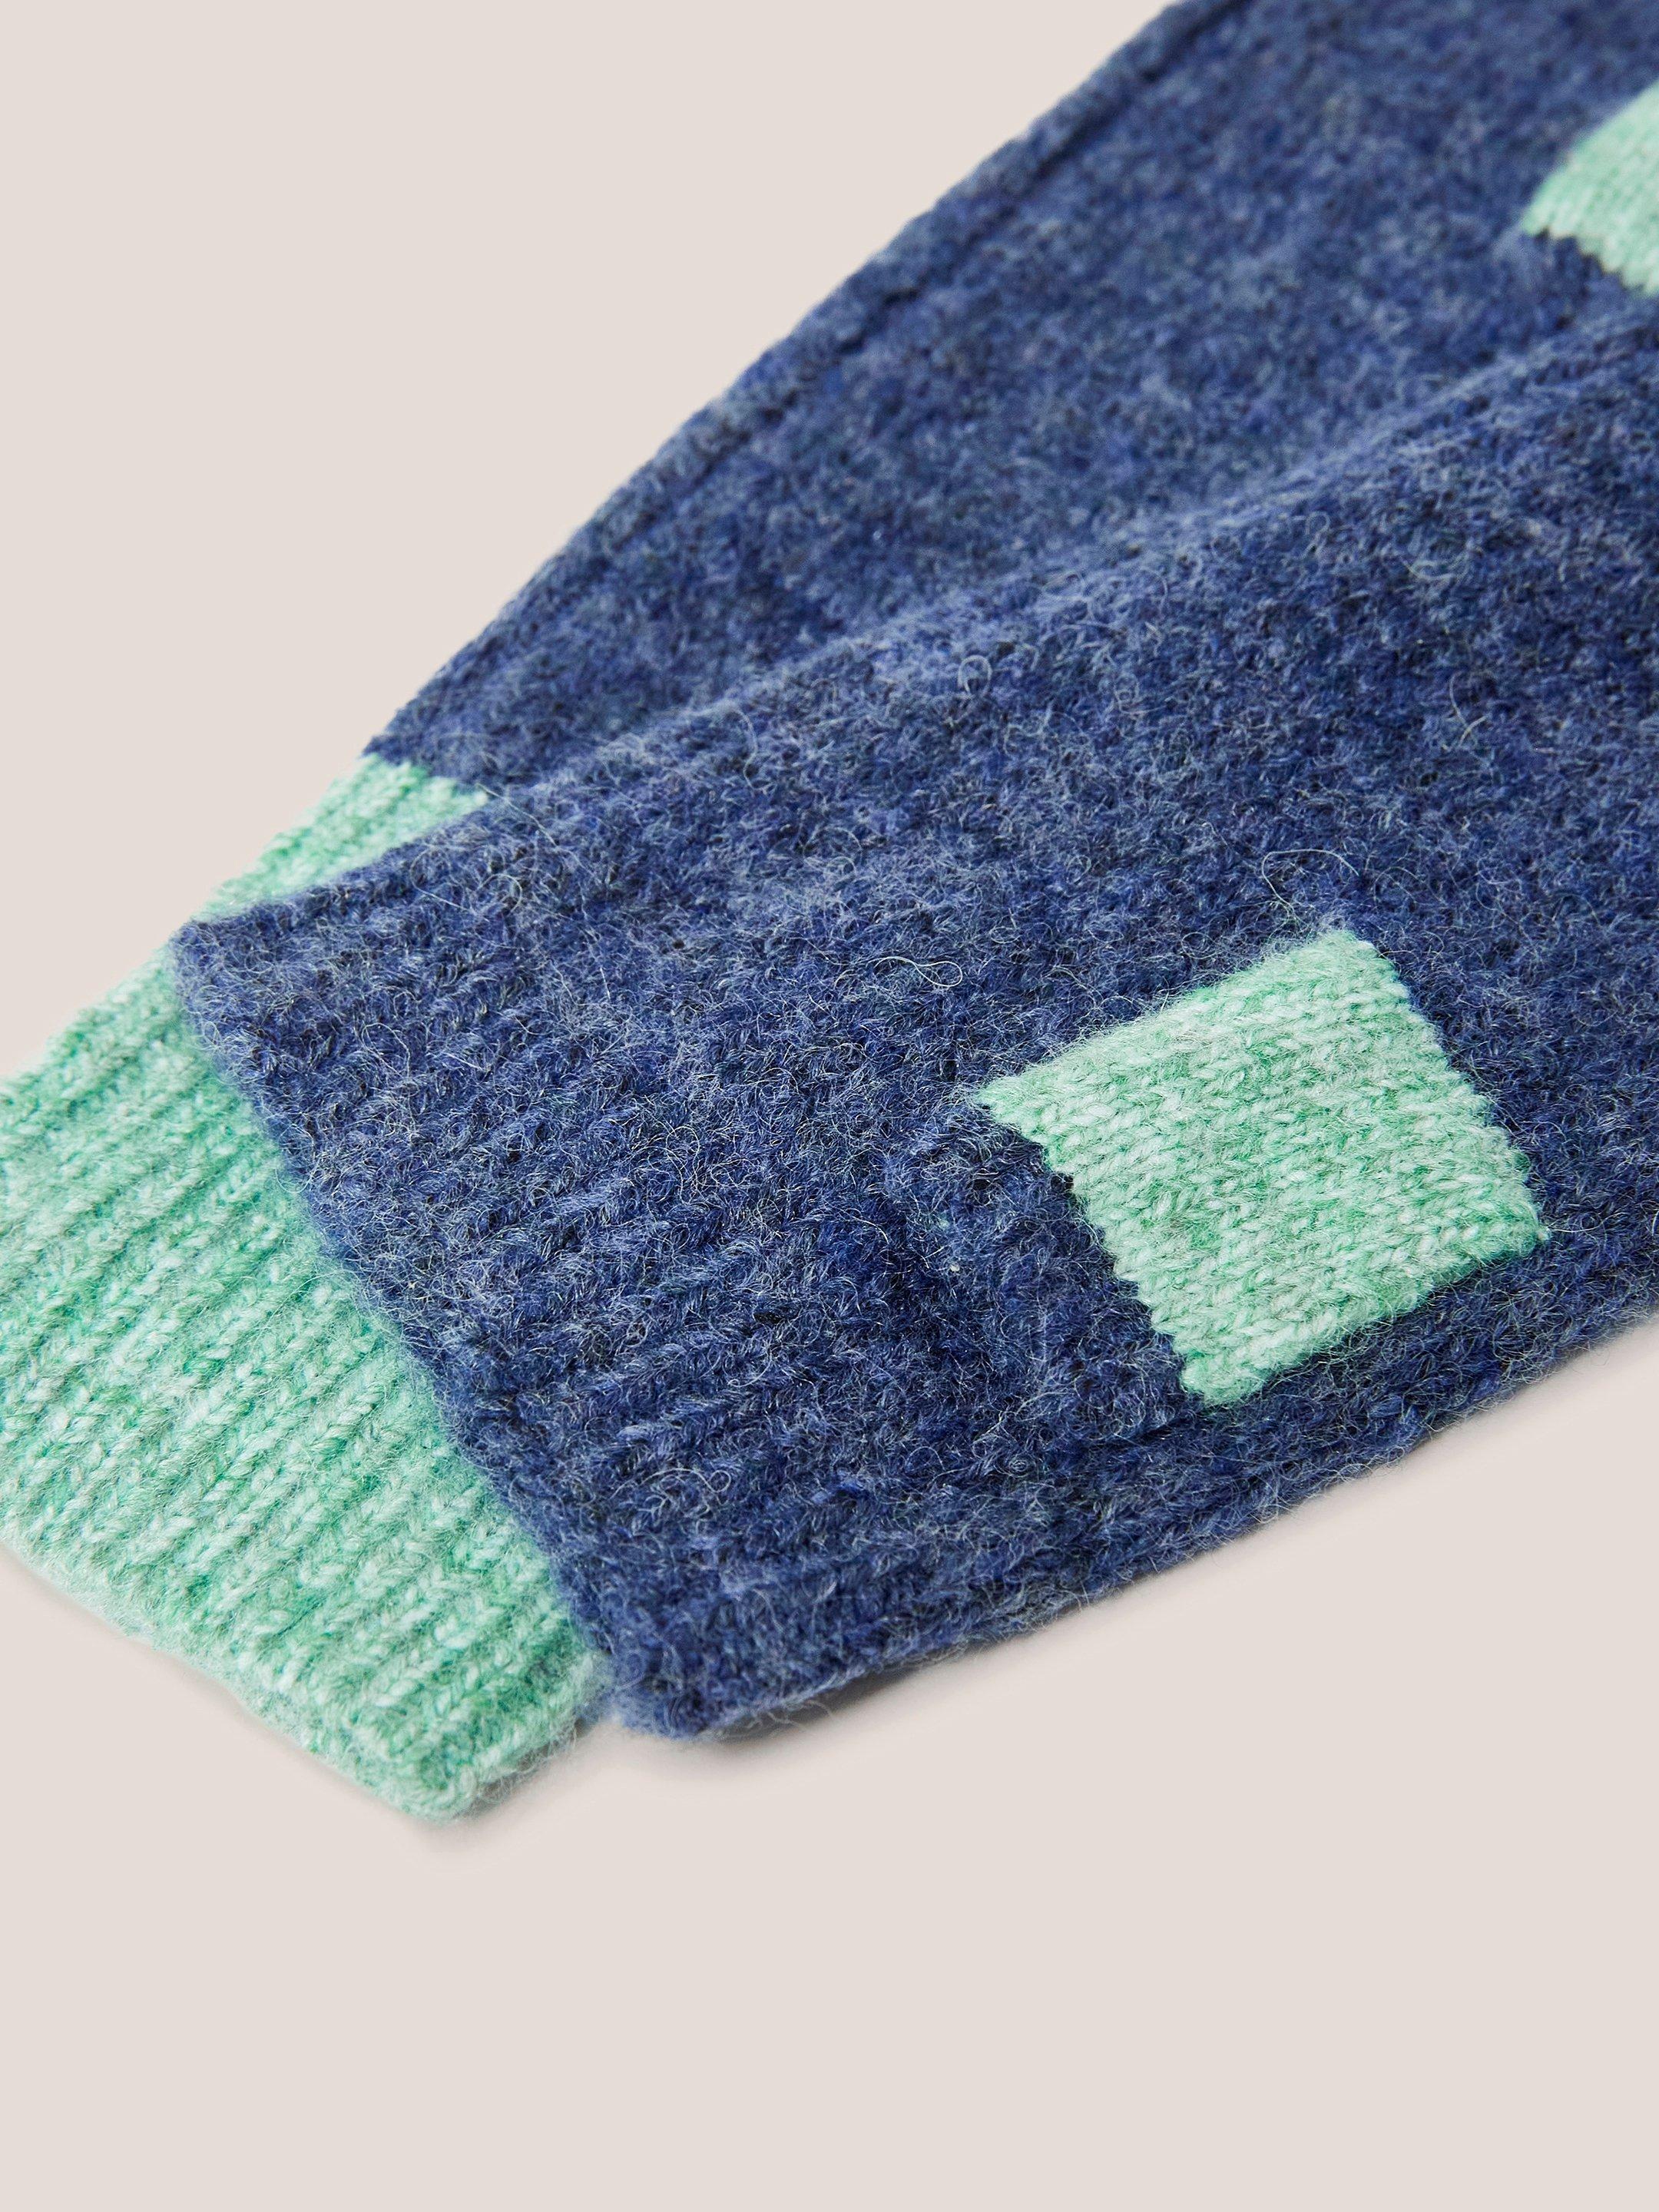 Knitted Fingerless Glove in TEAL MLT - FLAT DETAIL